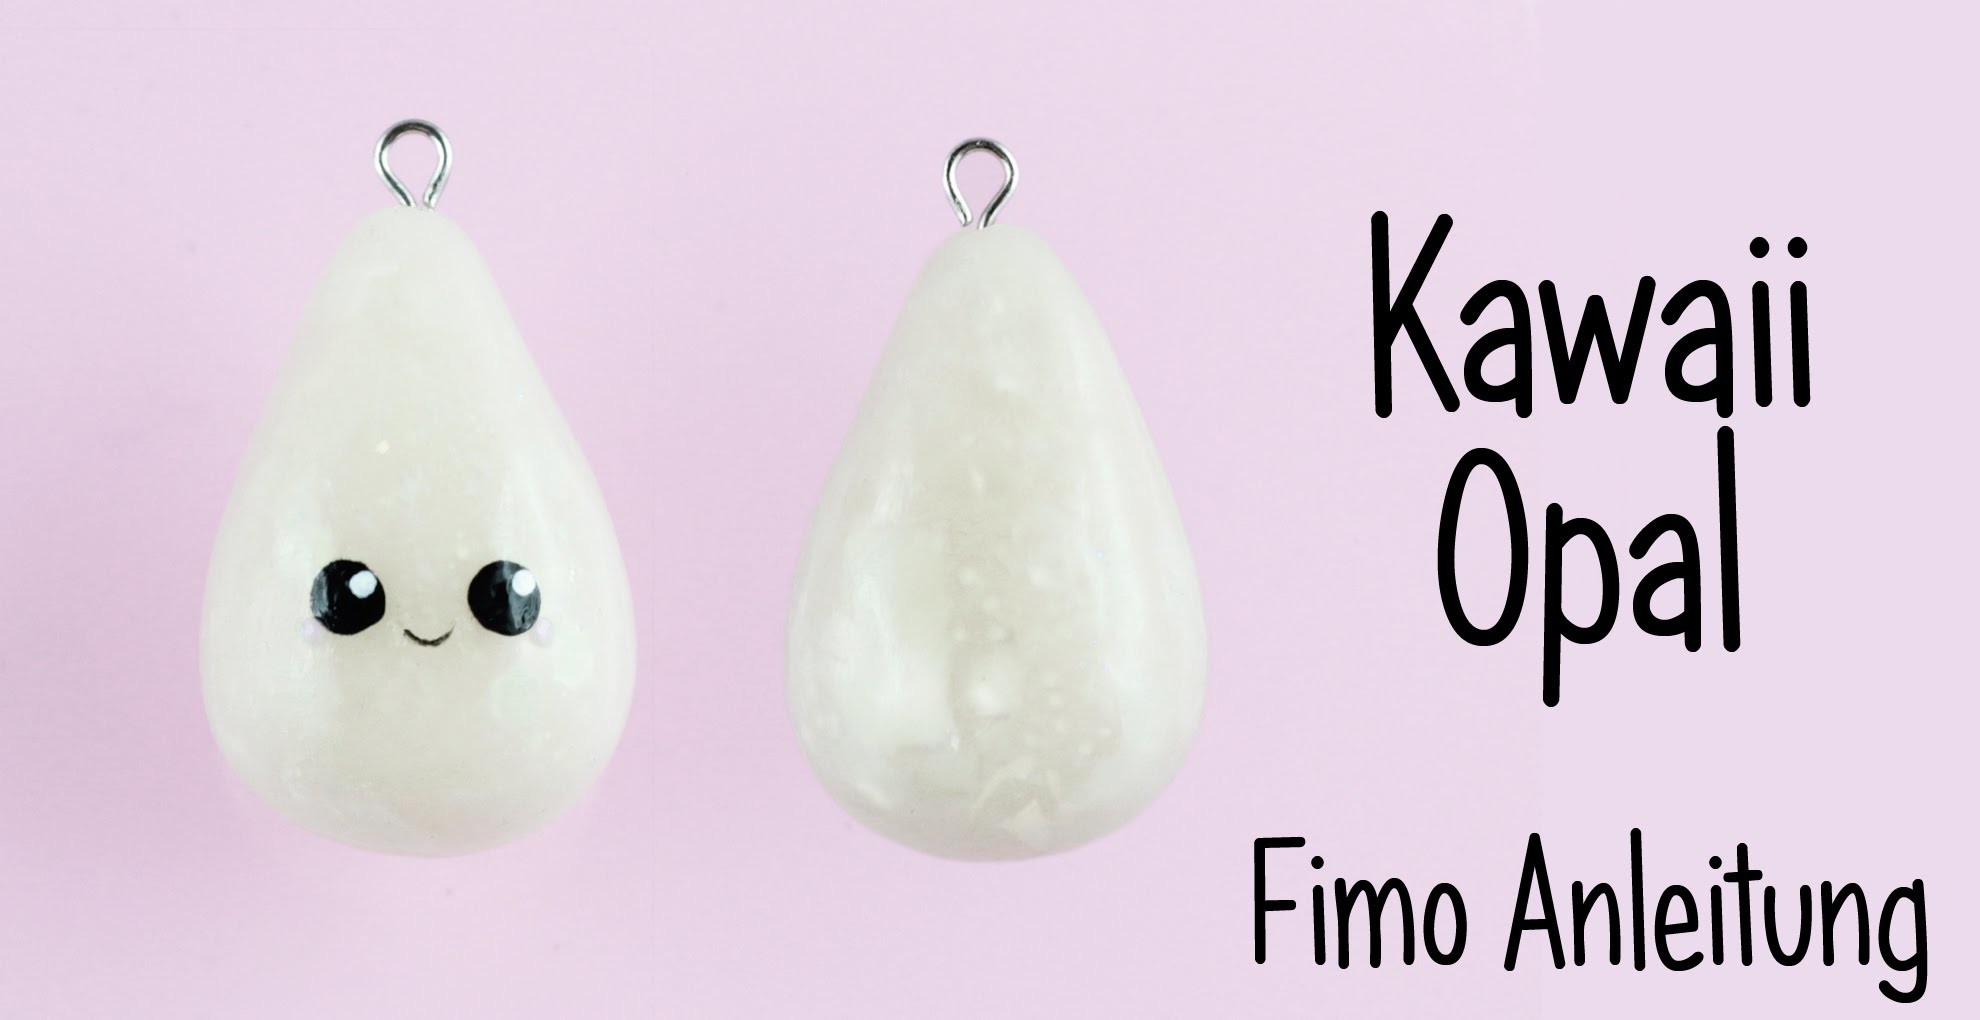 [Fimo Friday] Kawaii Opal Fimo Anleitung| Polymer Clay | Anielas Fimo